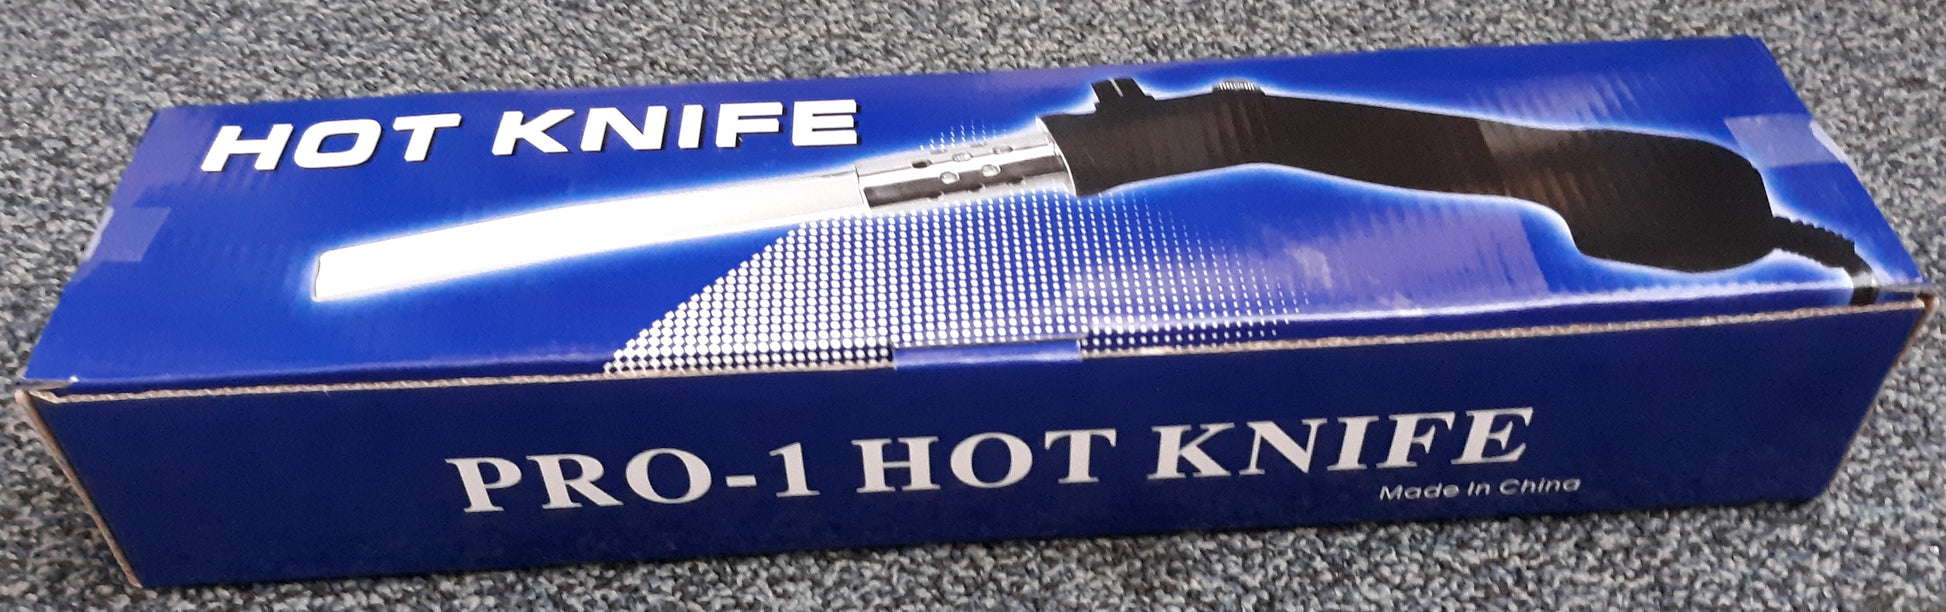 Pro-1 Hot Knife with Heavy Duty 5.5 Blade